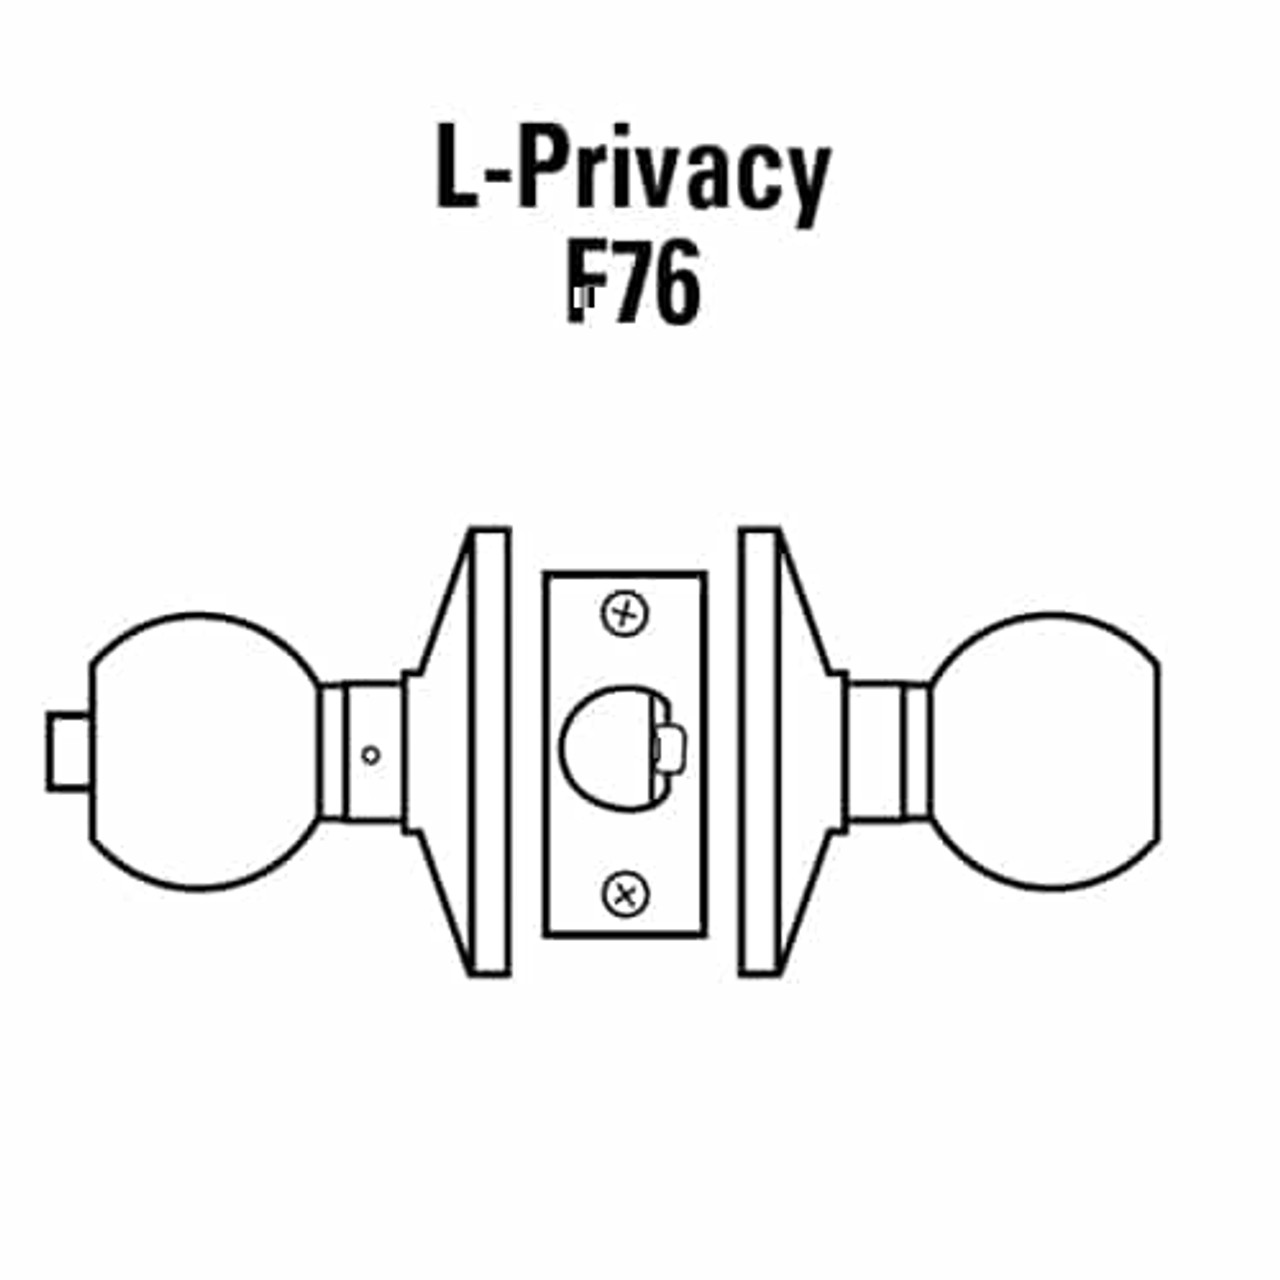 6K30L4CSTK606 Best 6K Series Privacy Medium Duty Cylindrical Knob Locks with Round Style in Satin Brass